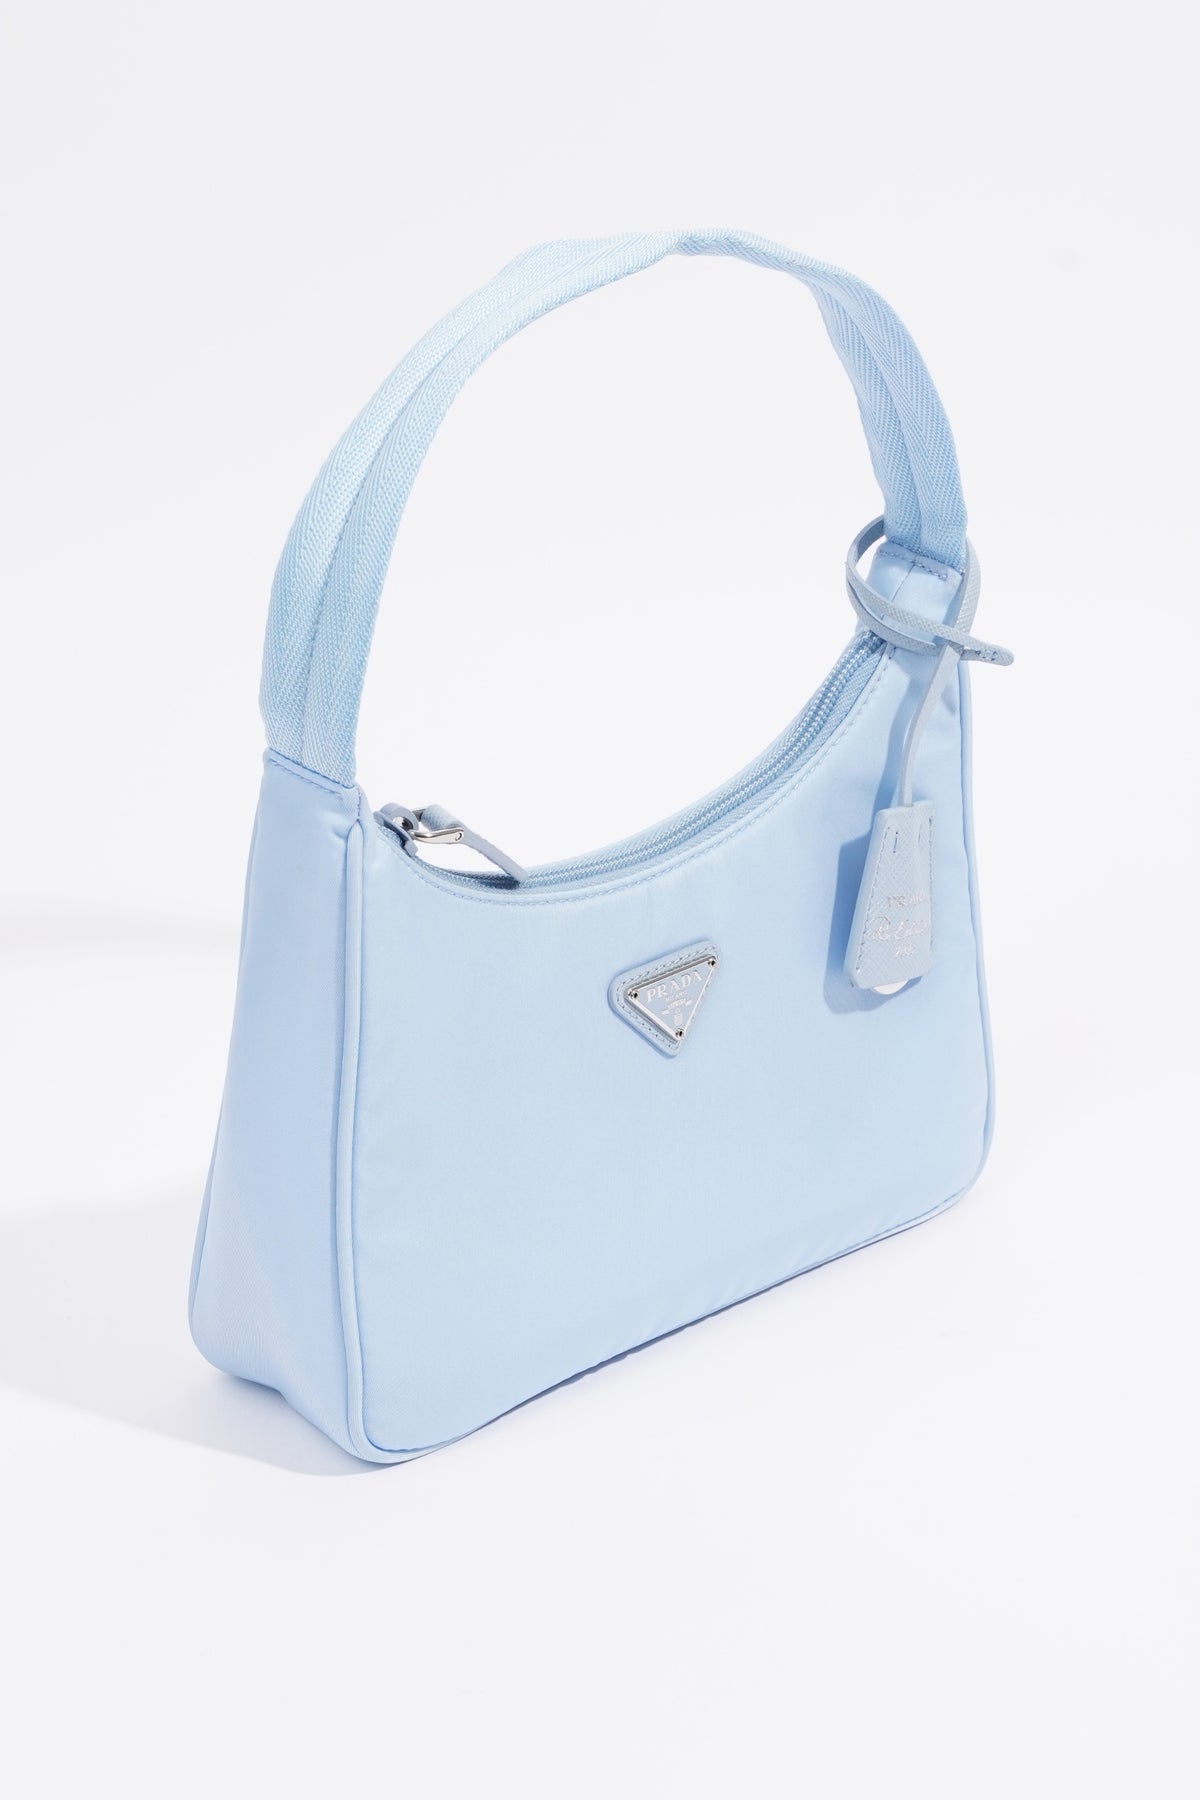 Prada Re-Edition Nylon Mini Shoulder Bag Periwinkle Blue in Nylon